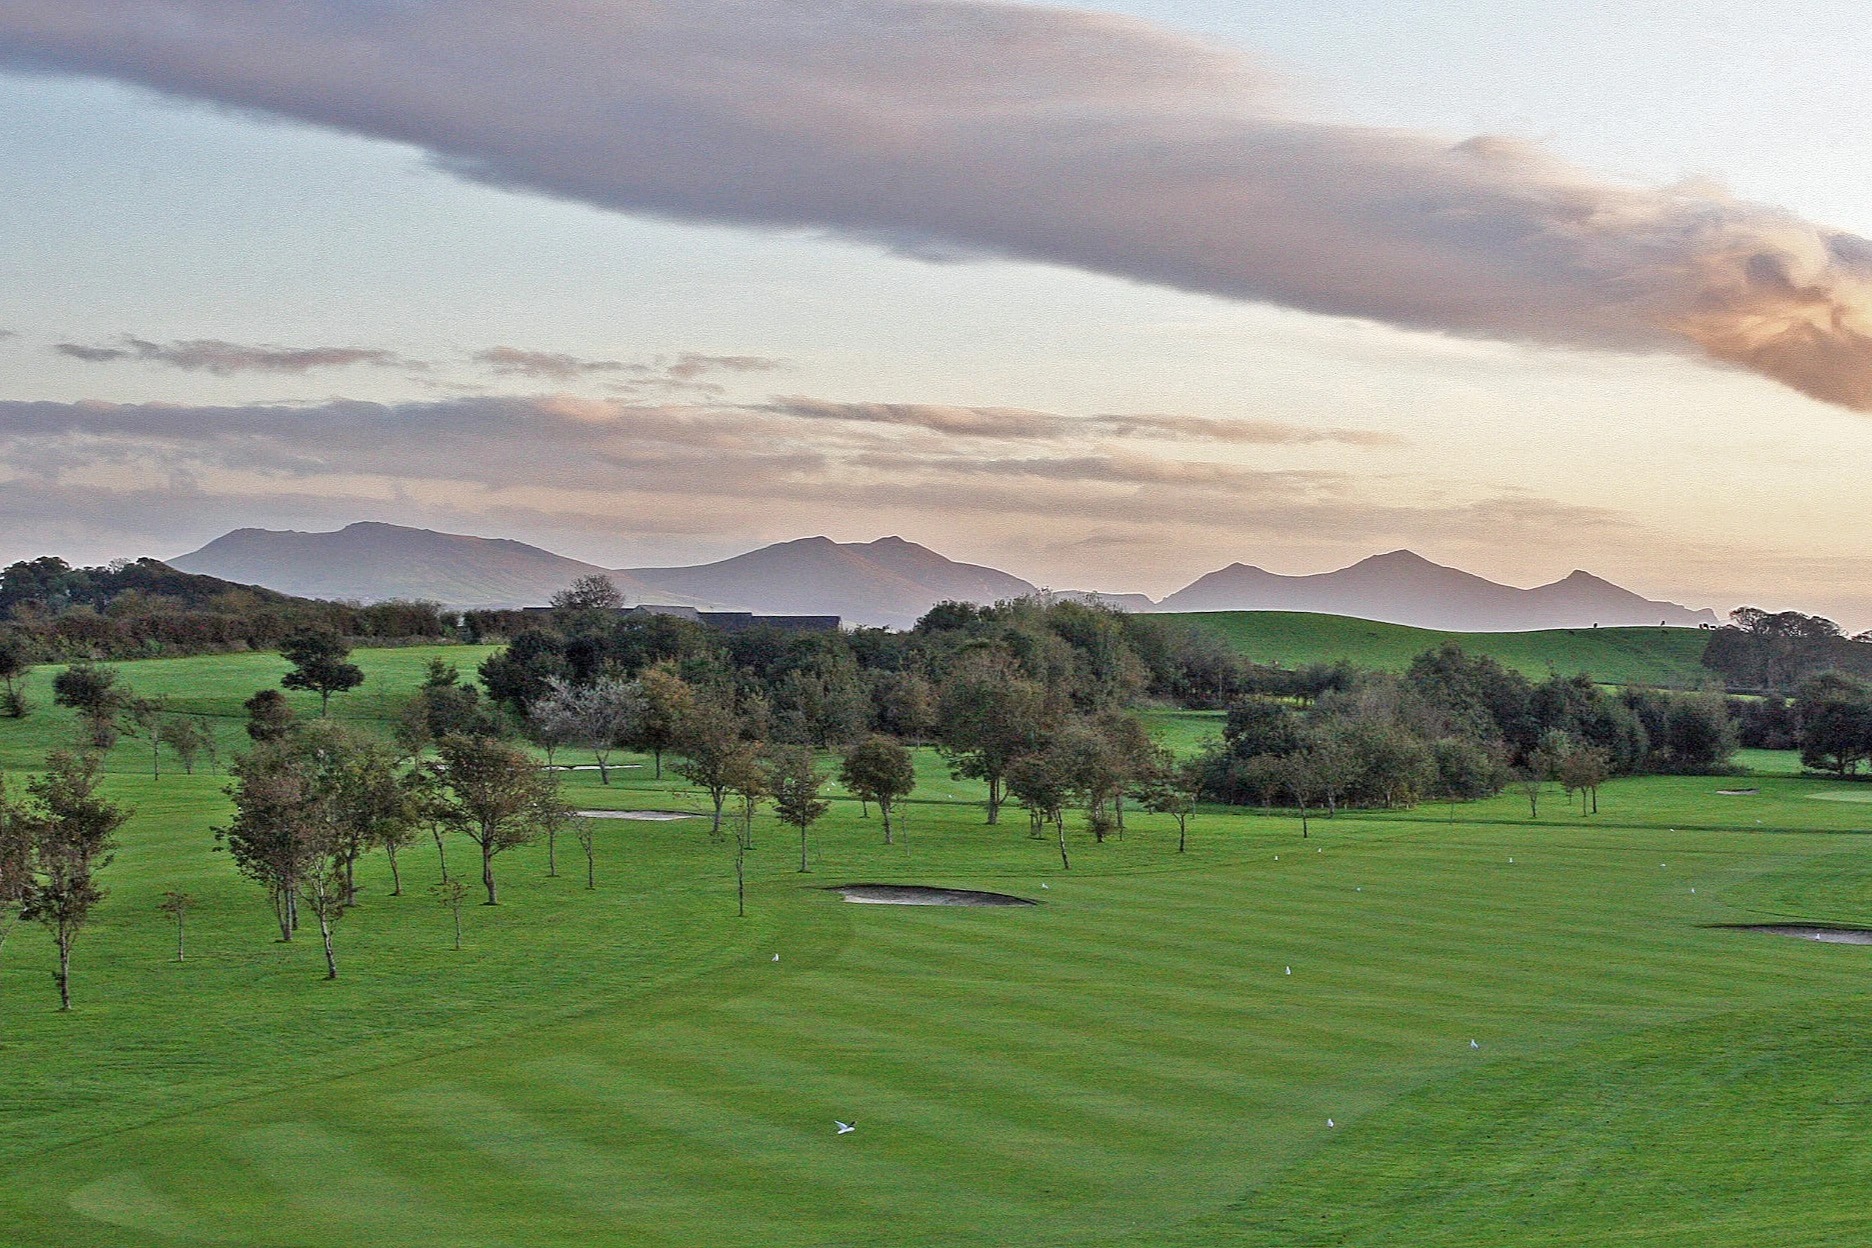 Royal Town of Caernarfon Golf Club